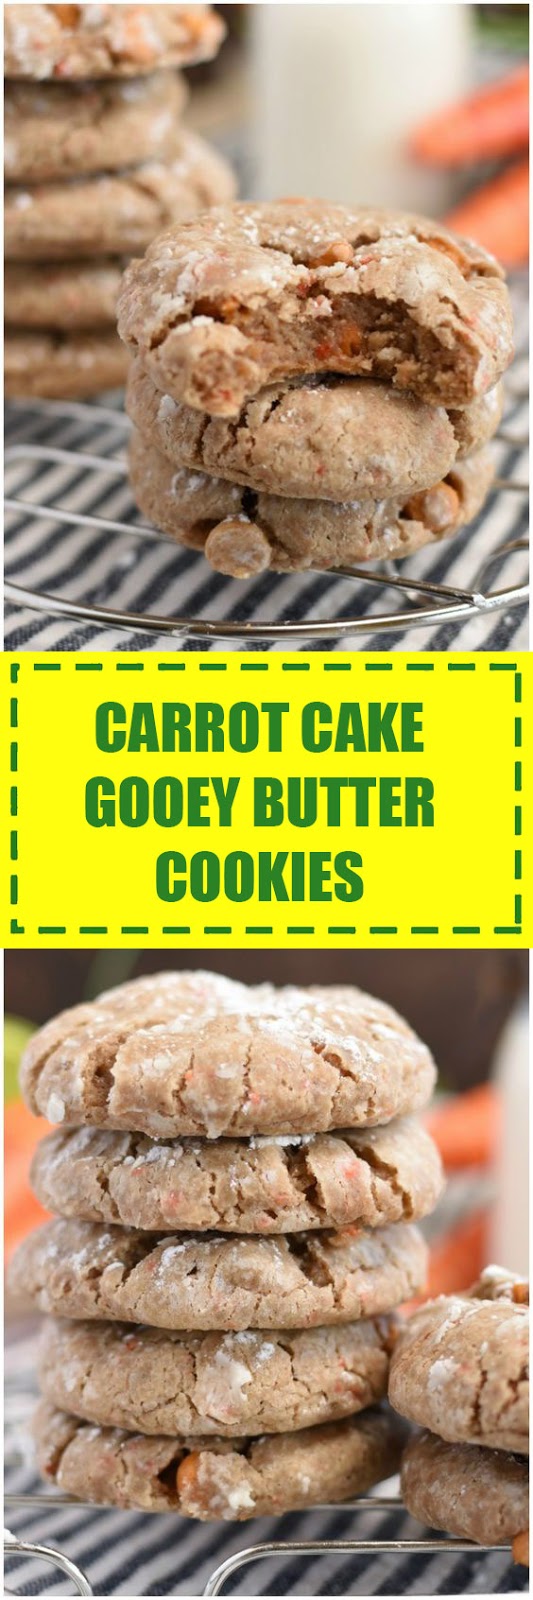 Carrot Cake Gooey Butter Cookies